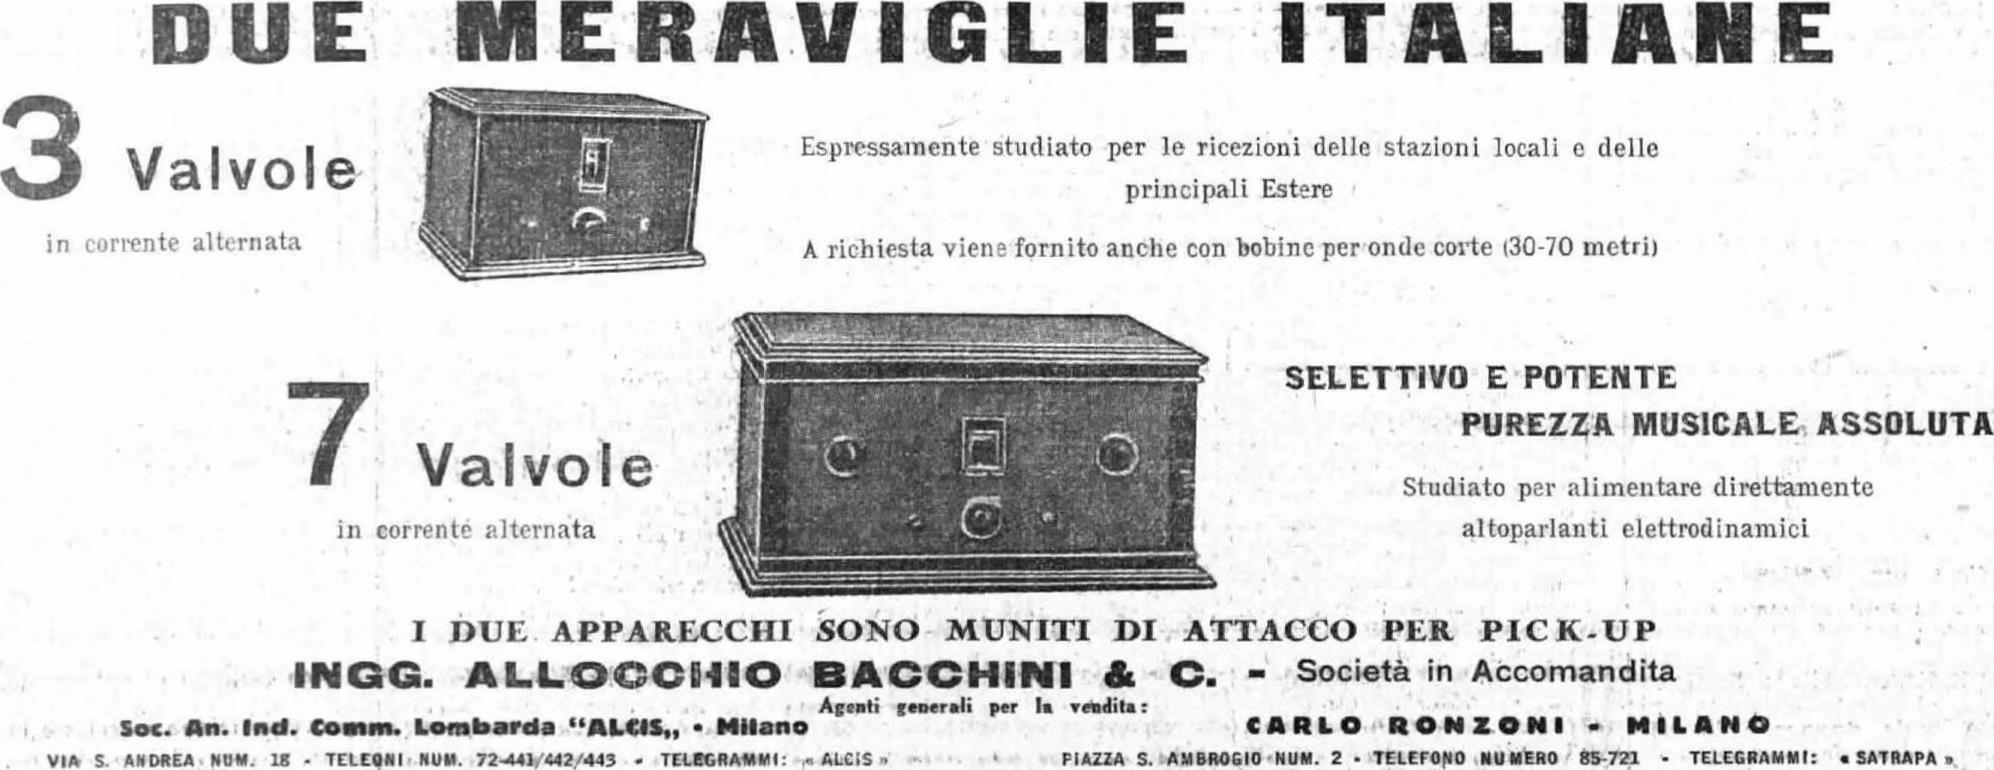 Bacchini 1930 4d1.jpg